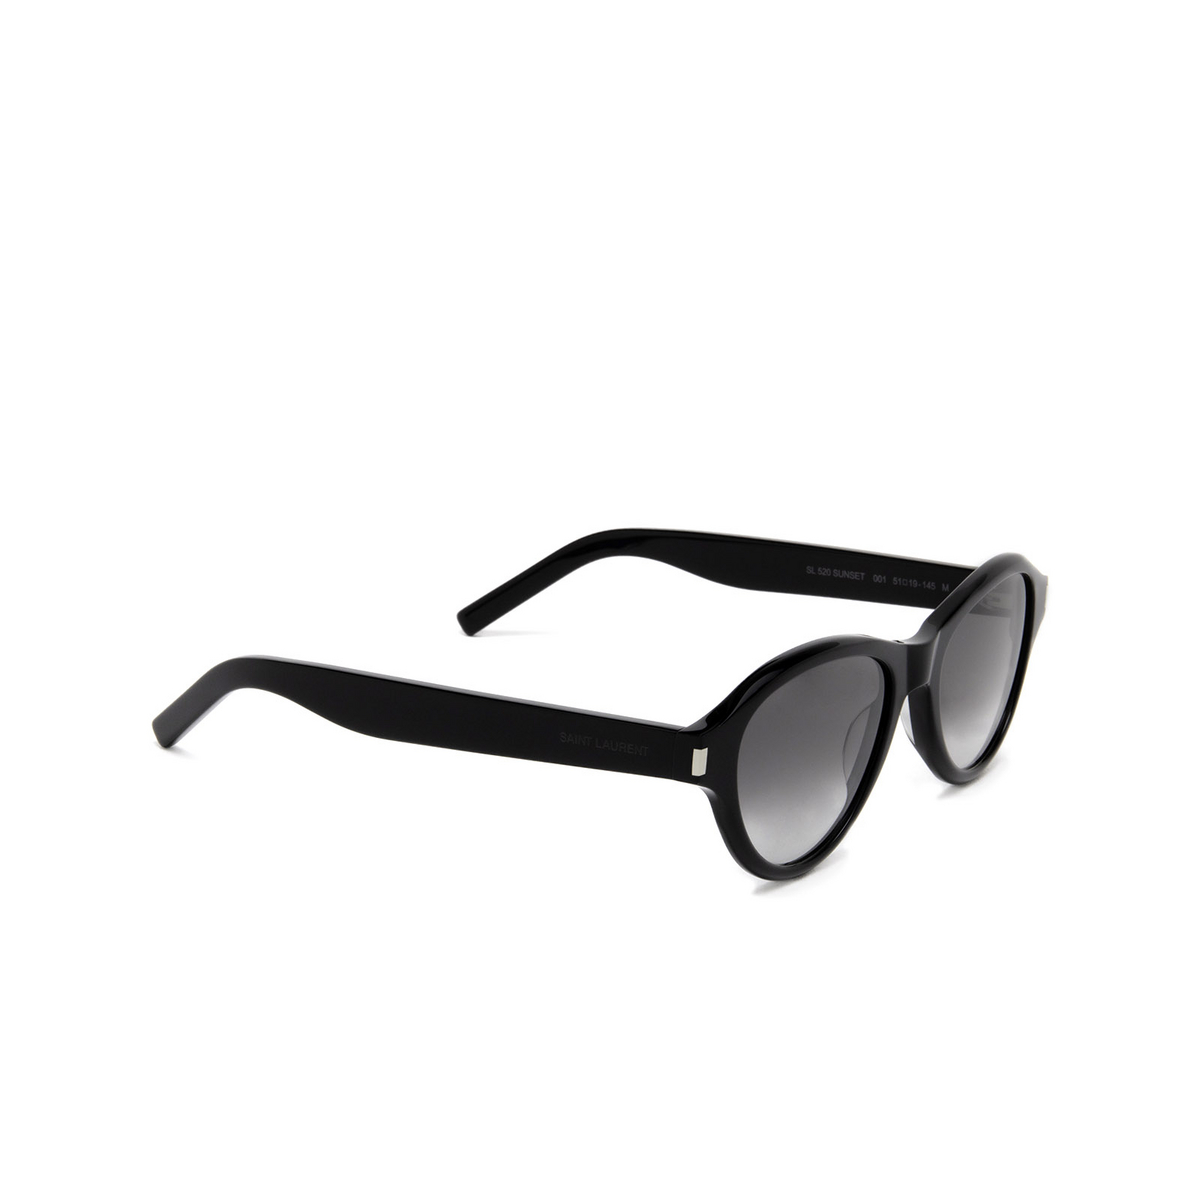 Saint Laurent® Oval Sunglasses: SL 520 SUNSET color Black 001 - three-quarters view.